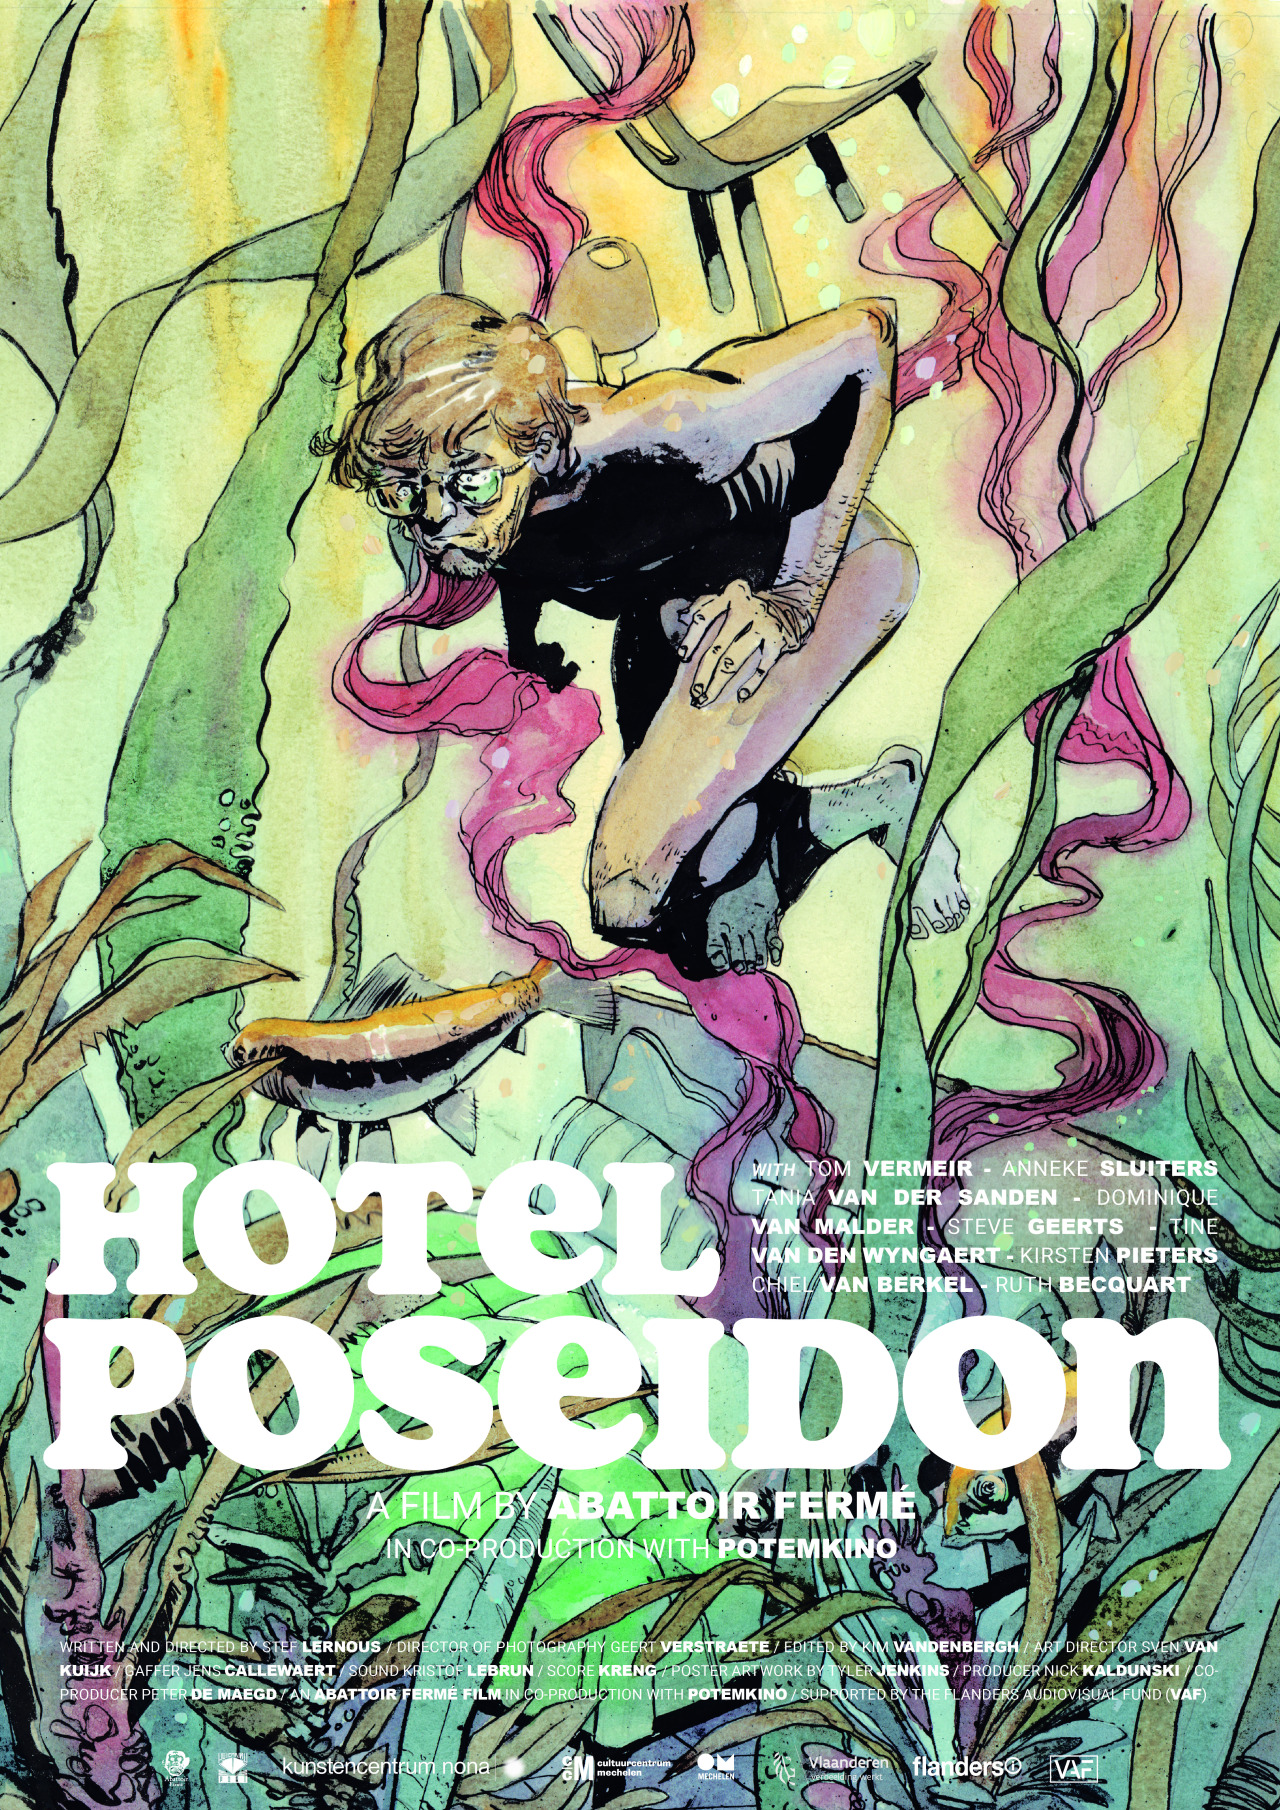 Poster for “Hotel Poseidon”.
Artwork by Tyler Jenkins.
Lay-out design by Ann Vangenechten.